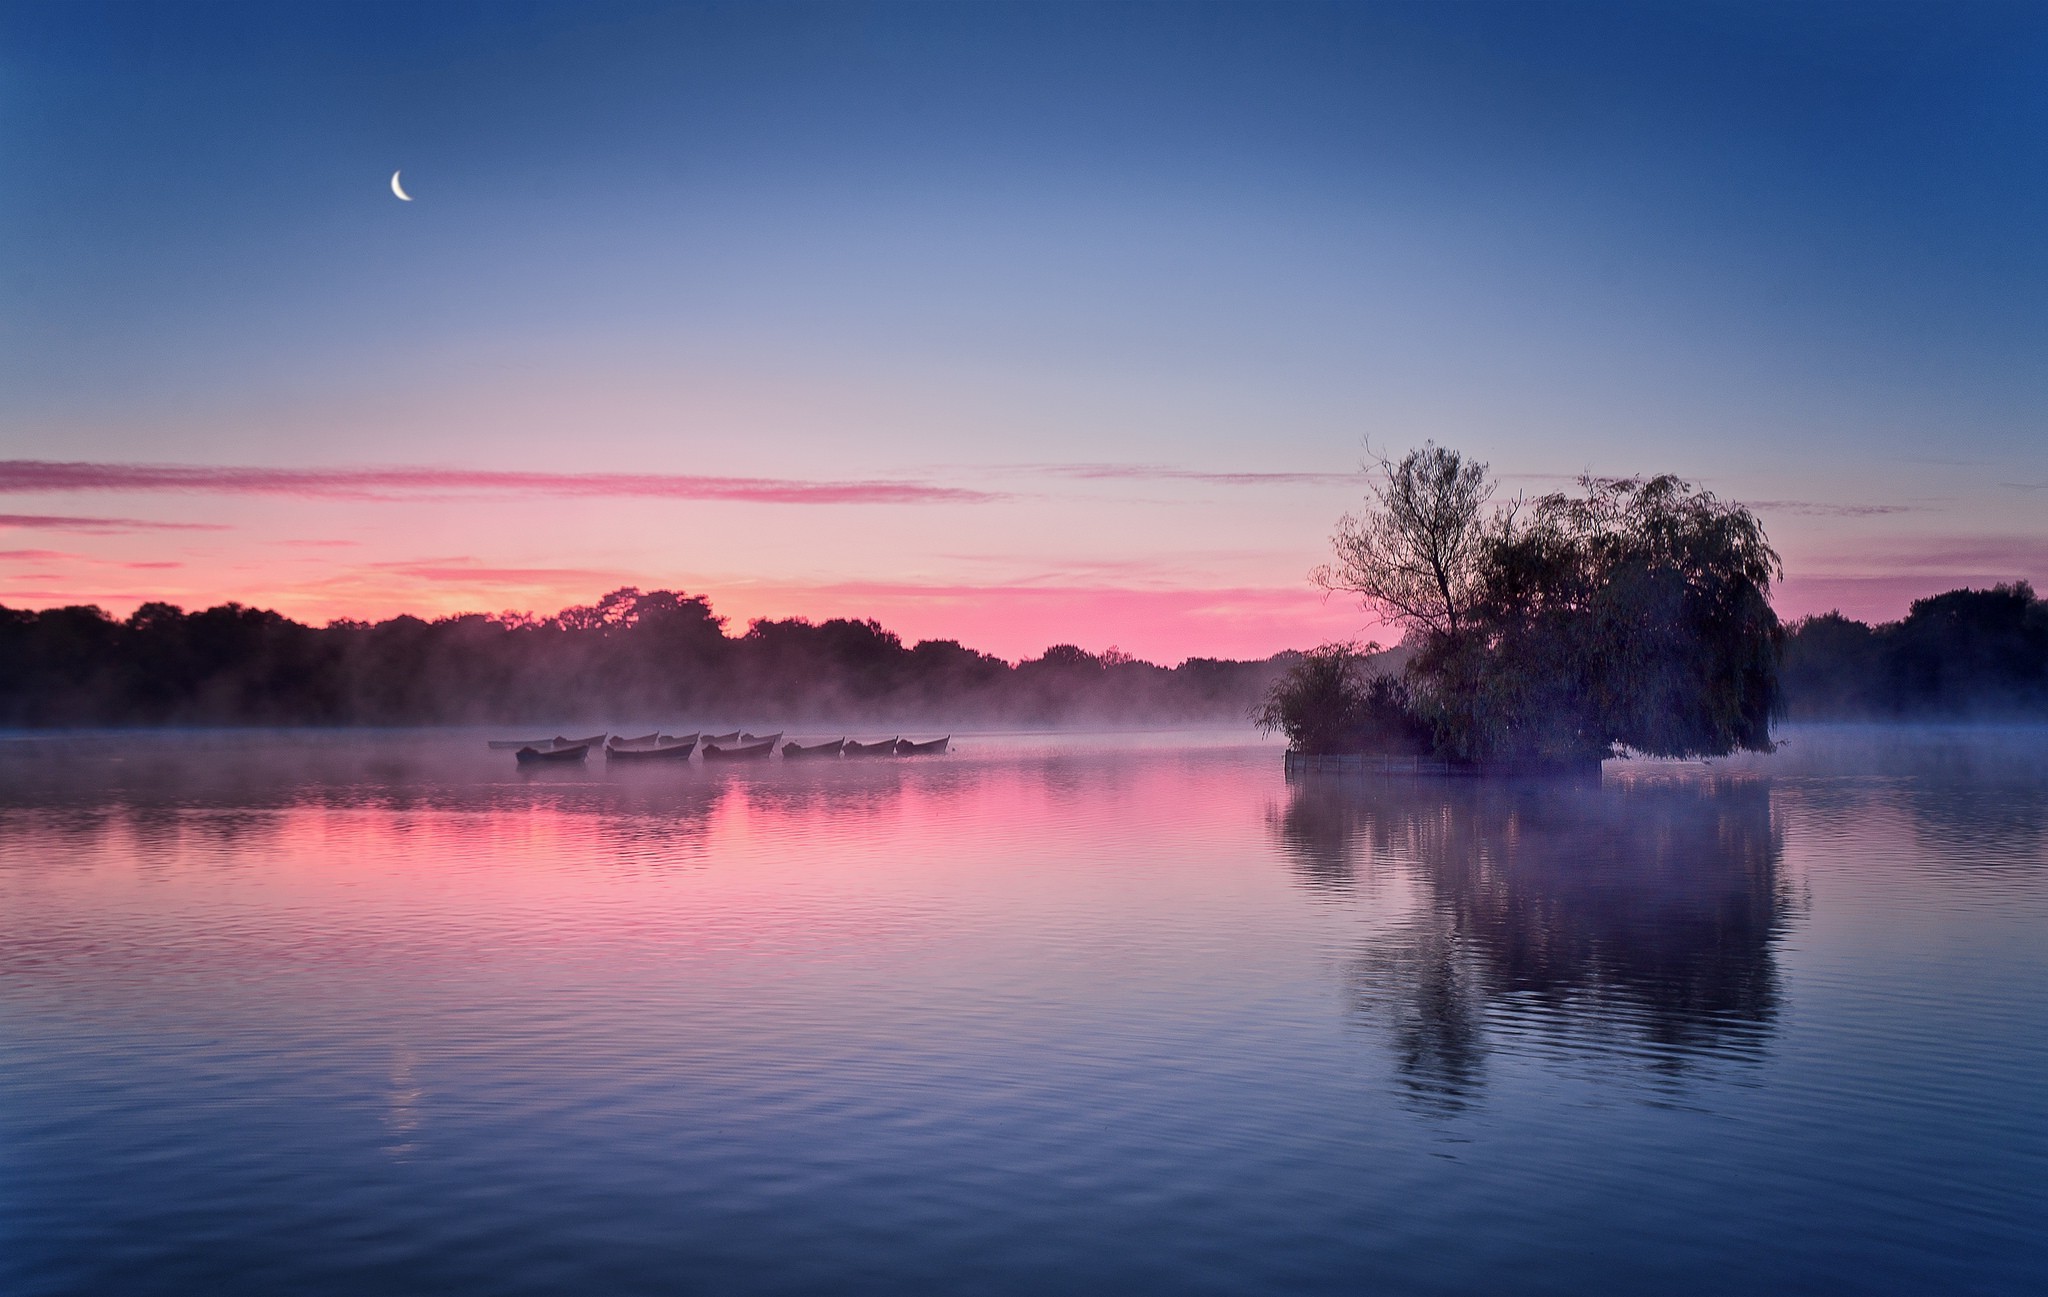 photography, Nature, Landscape, Morning, Mist, Daylight, Lake, Boat, Trees, Calm, Moon, England